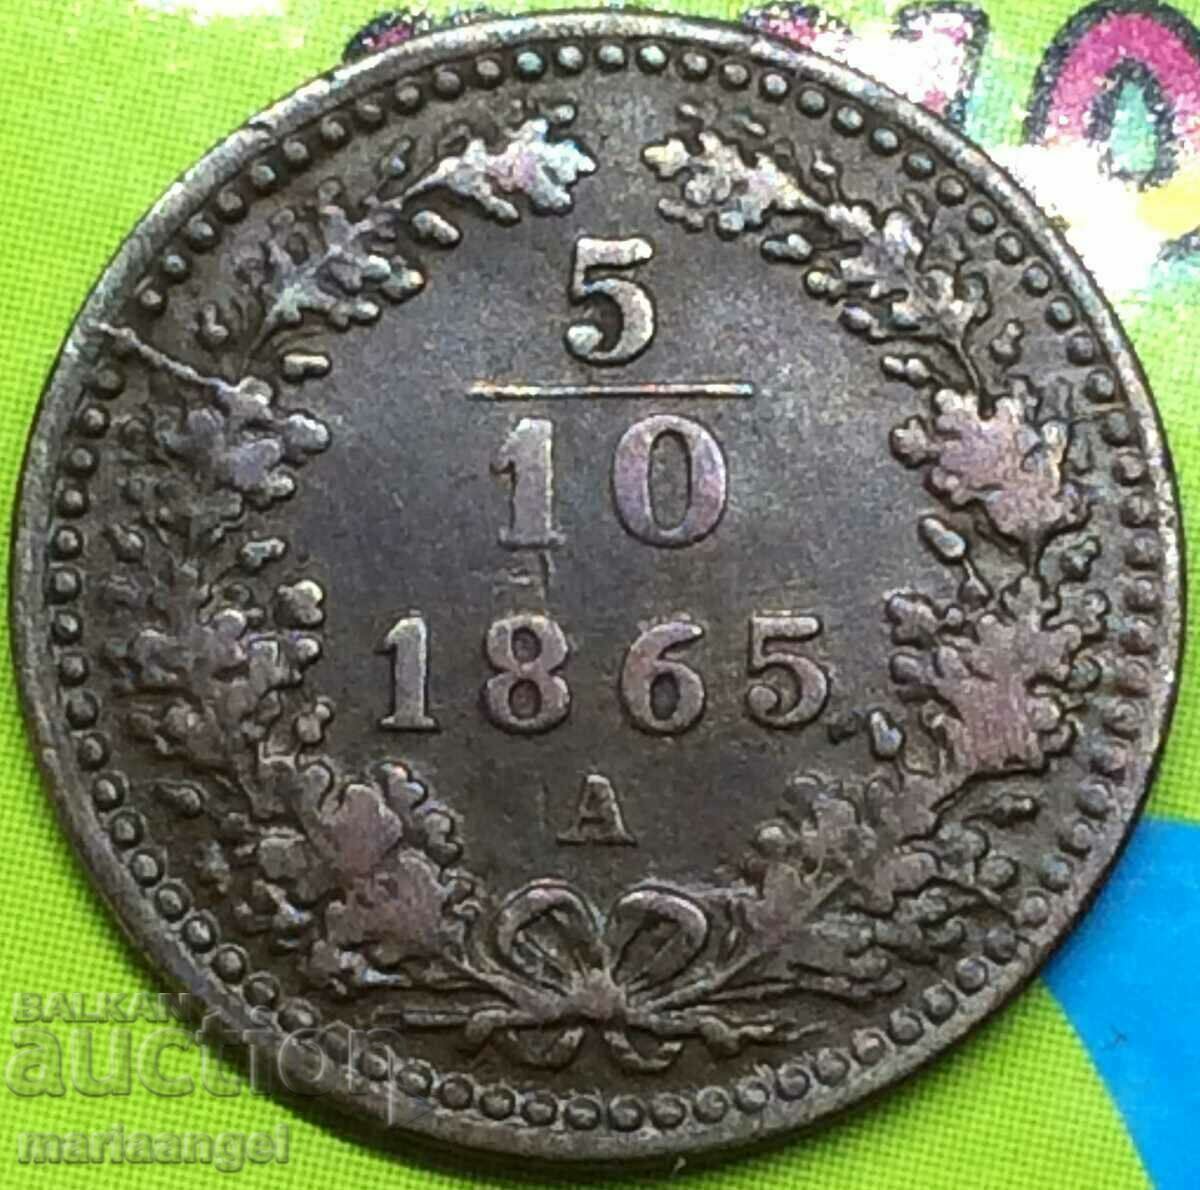 1 Kreuzer 1865 1 soldo A-Vena Austria για Ιταλία εκτός σπανίου